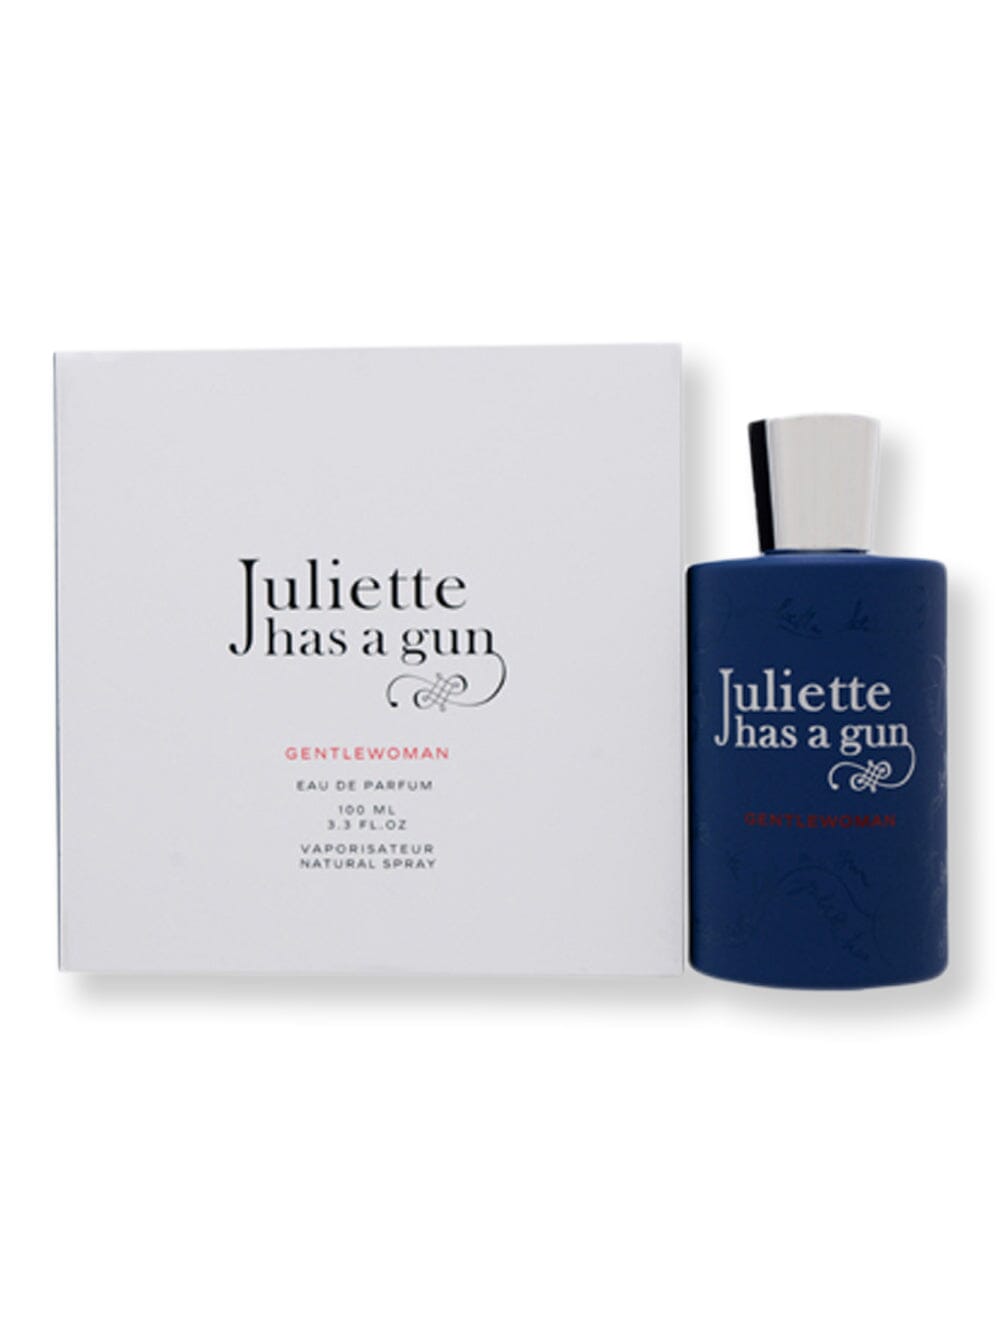 Juliette has a Gun Juliette has a Gun Gentlewoman Has A Gun EDP Spray 3.3 oz100 ml Perfume 